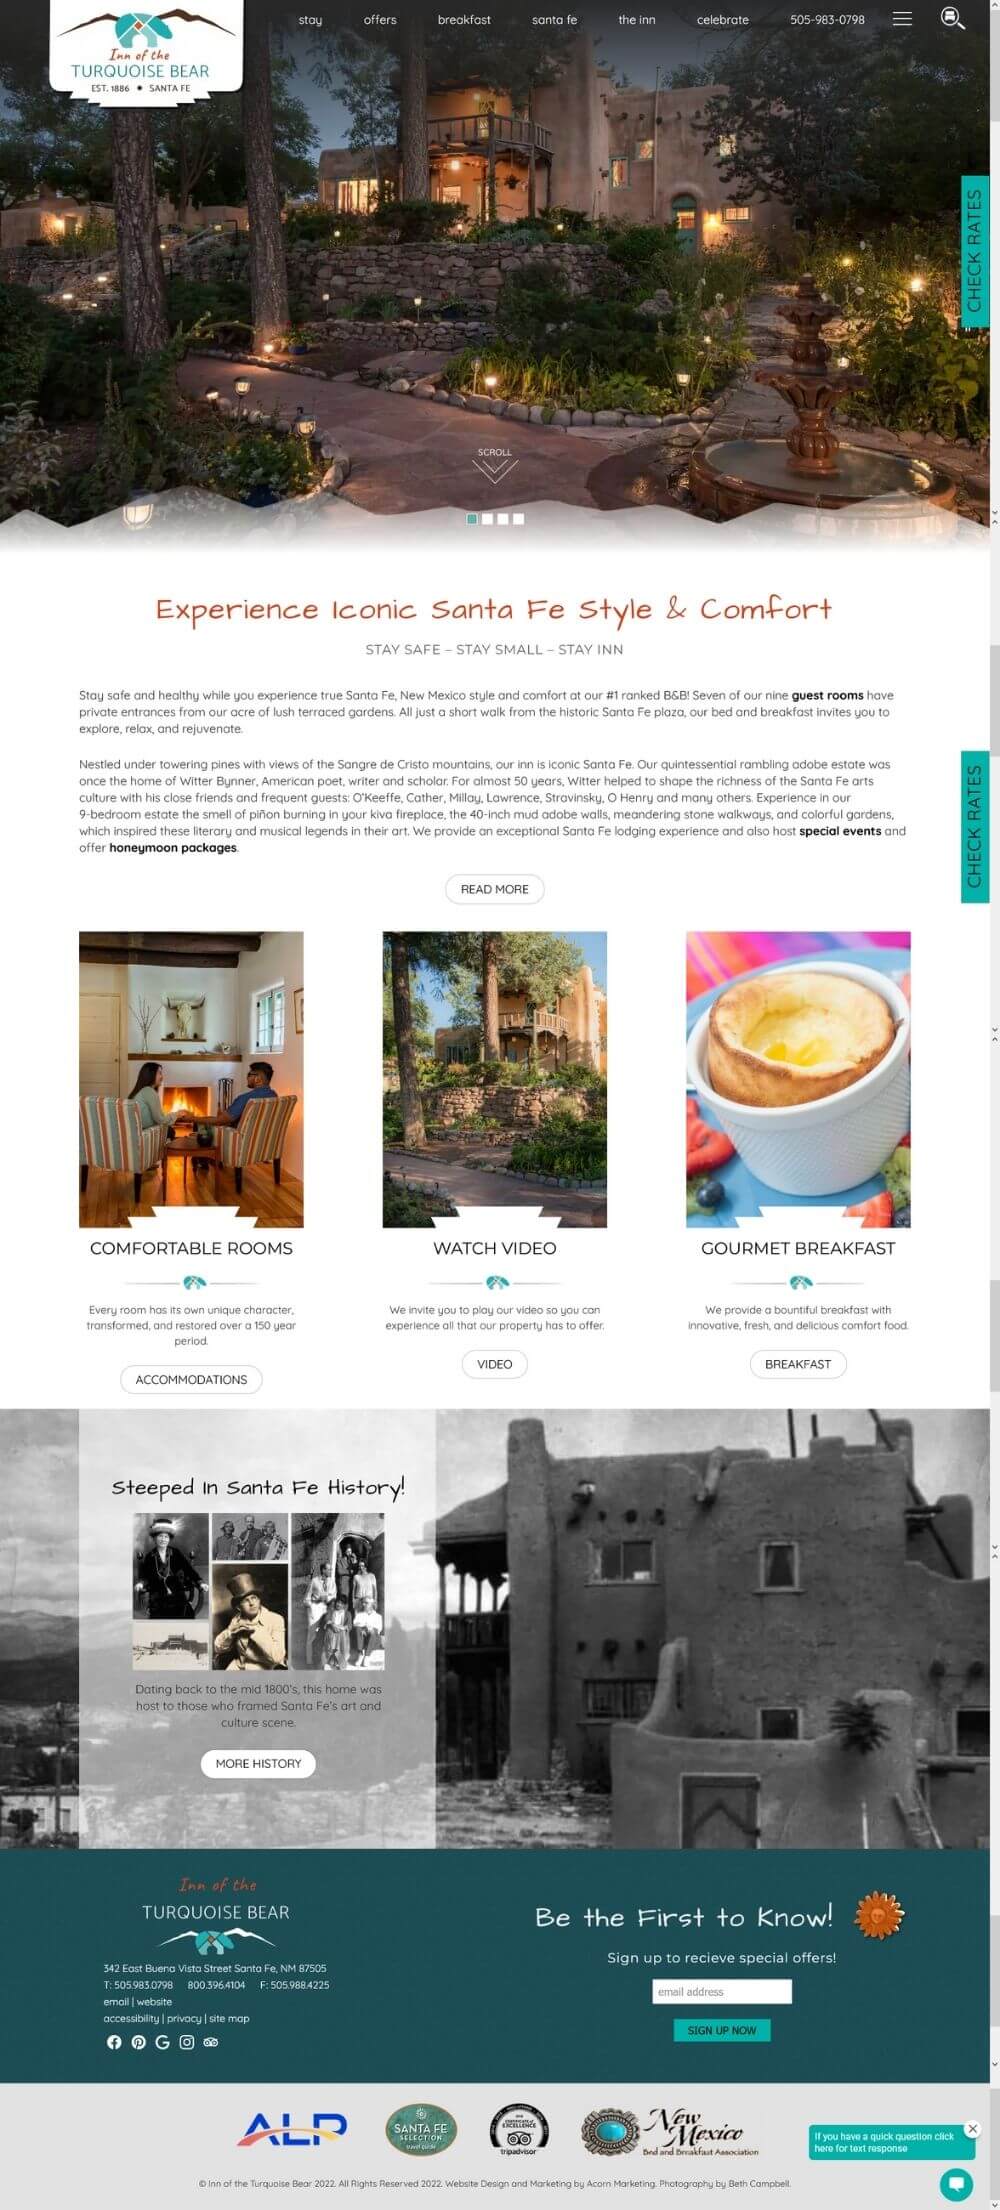 Inn of the Turquoise Bear website homepage screenshot